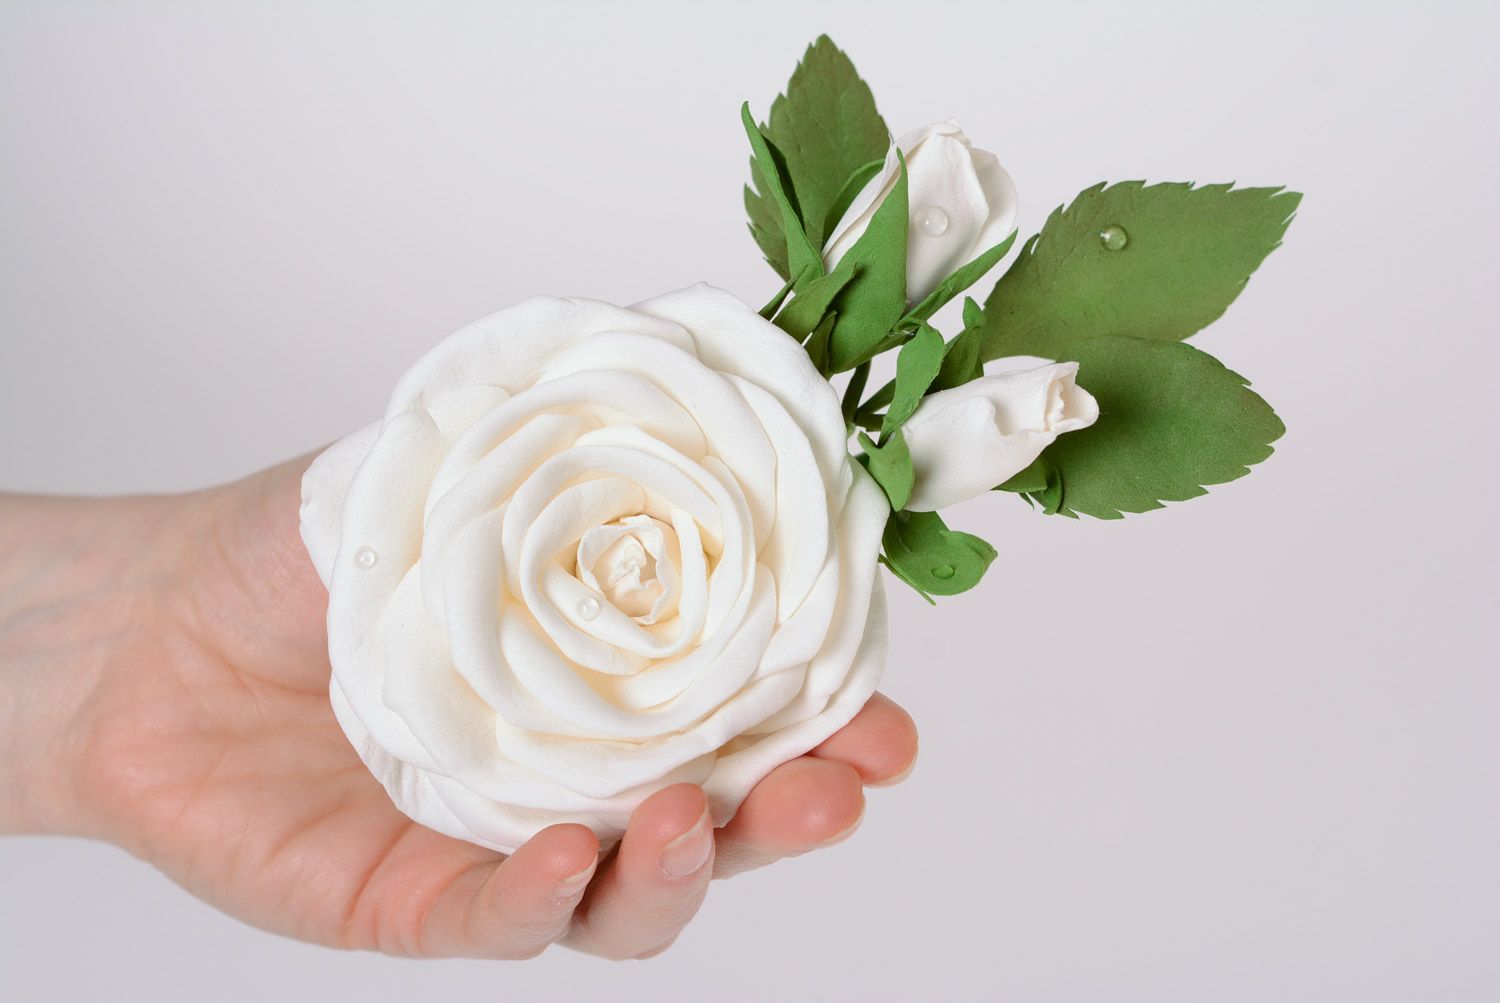 Barrette grande fleur rose blanche en foamiran faite main pince métallique photo 3